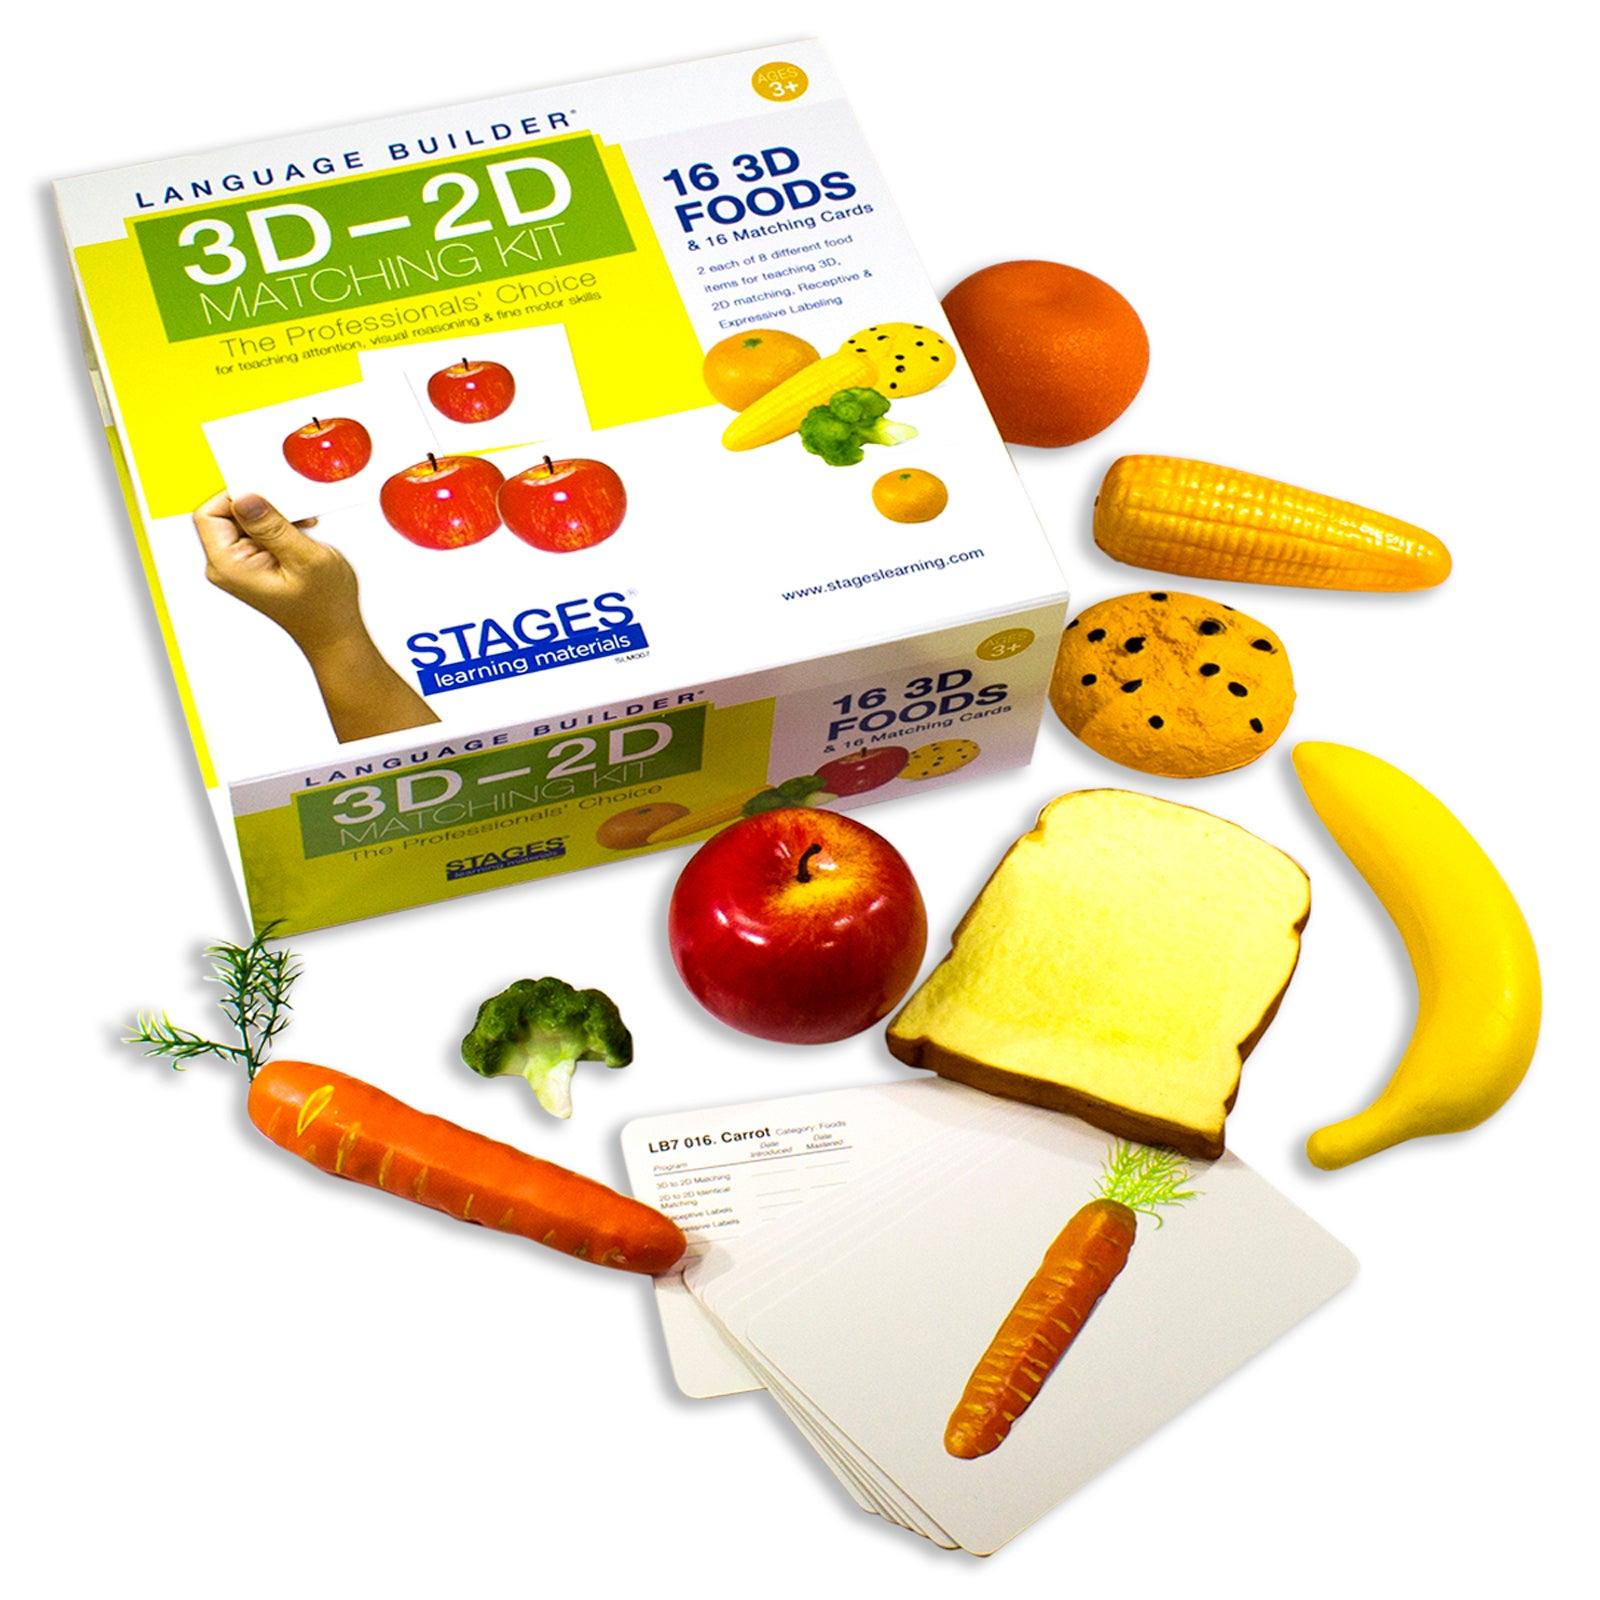 Language Builder® 3D-2D Matching Kit, Foods - Loomini